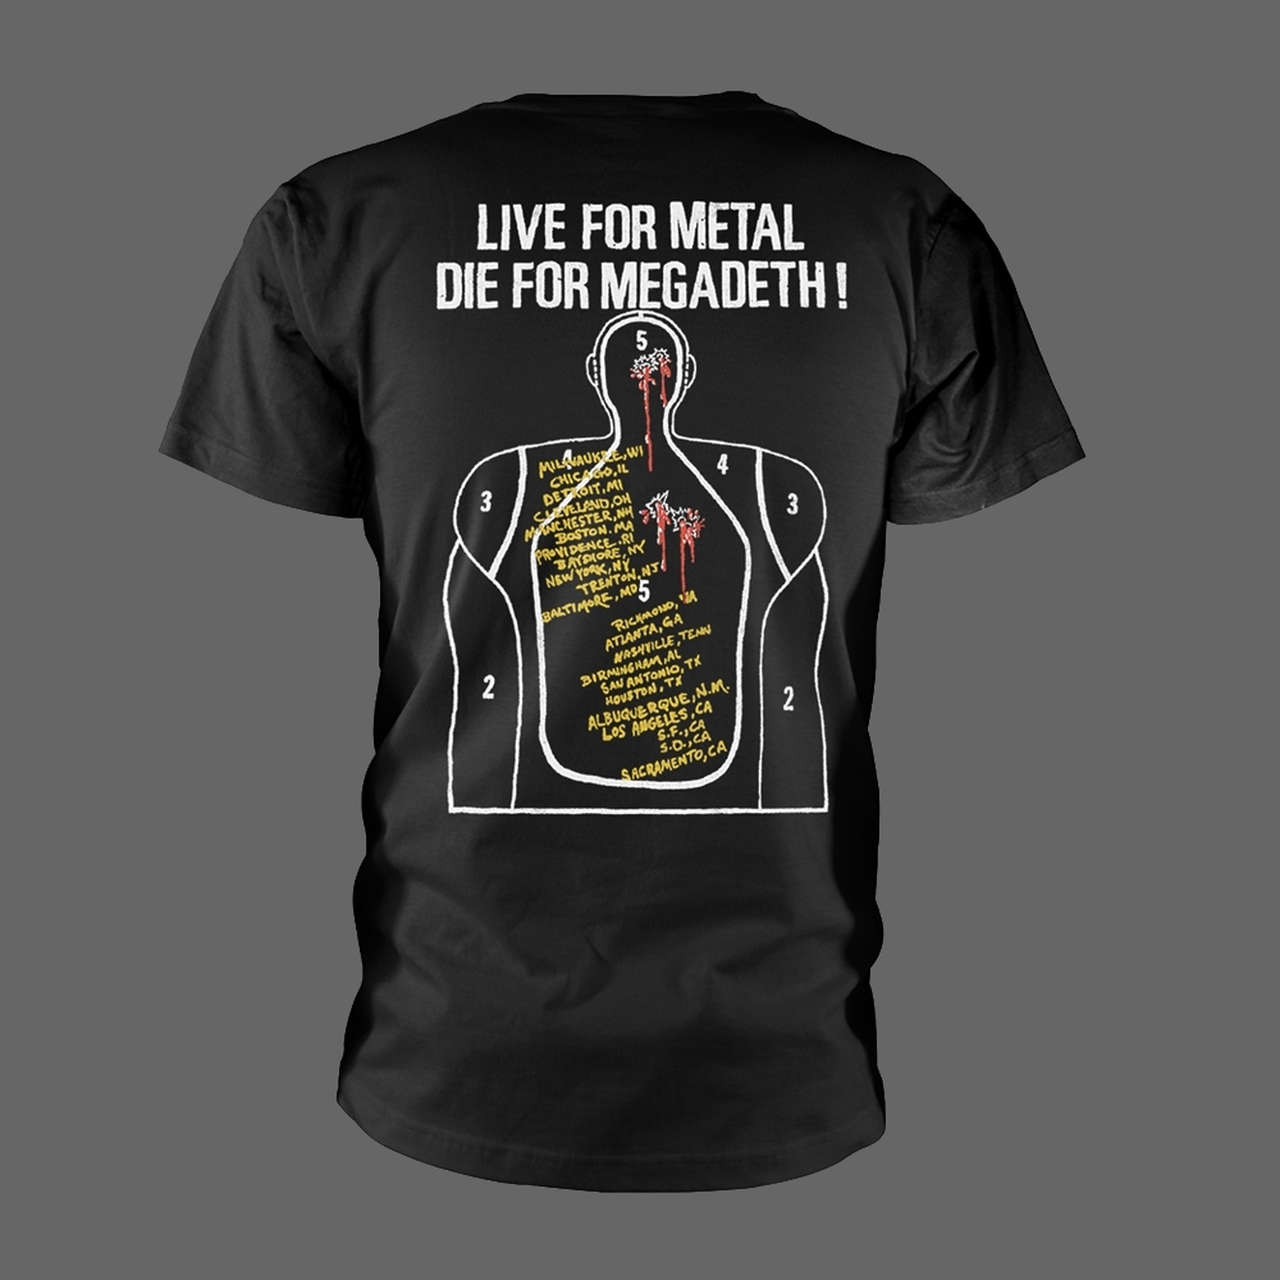 Megadeth - I Kill... For Thrills (1986 Tour) (T-Shirt)